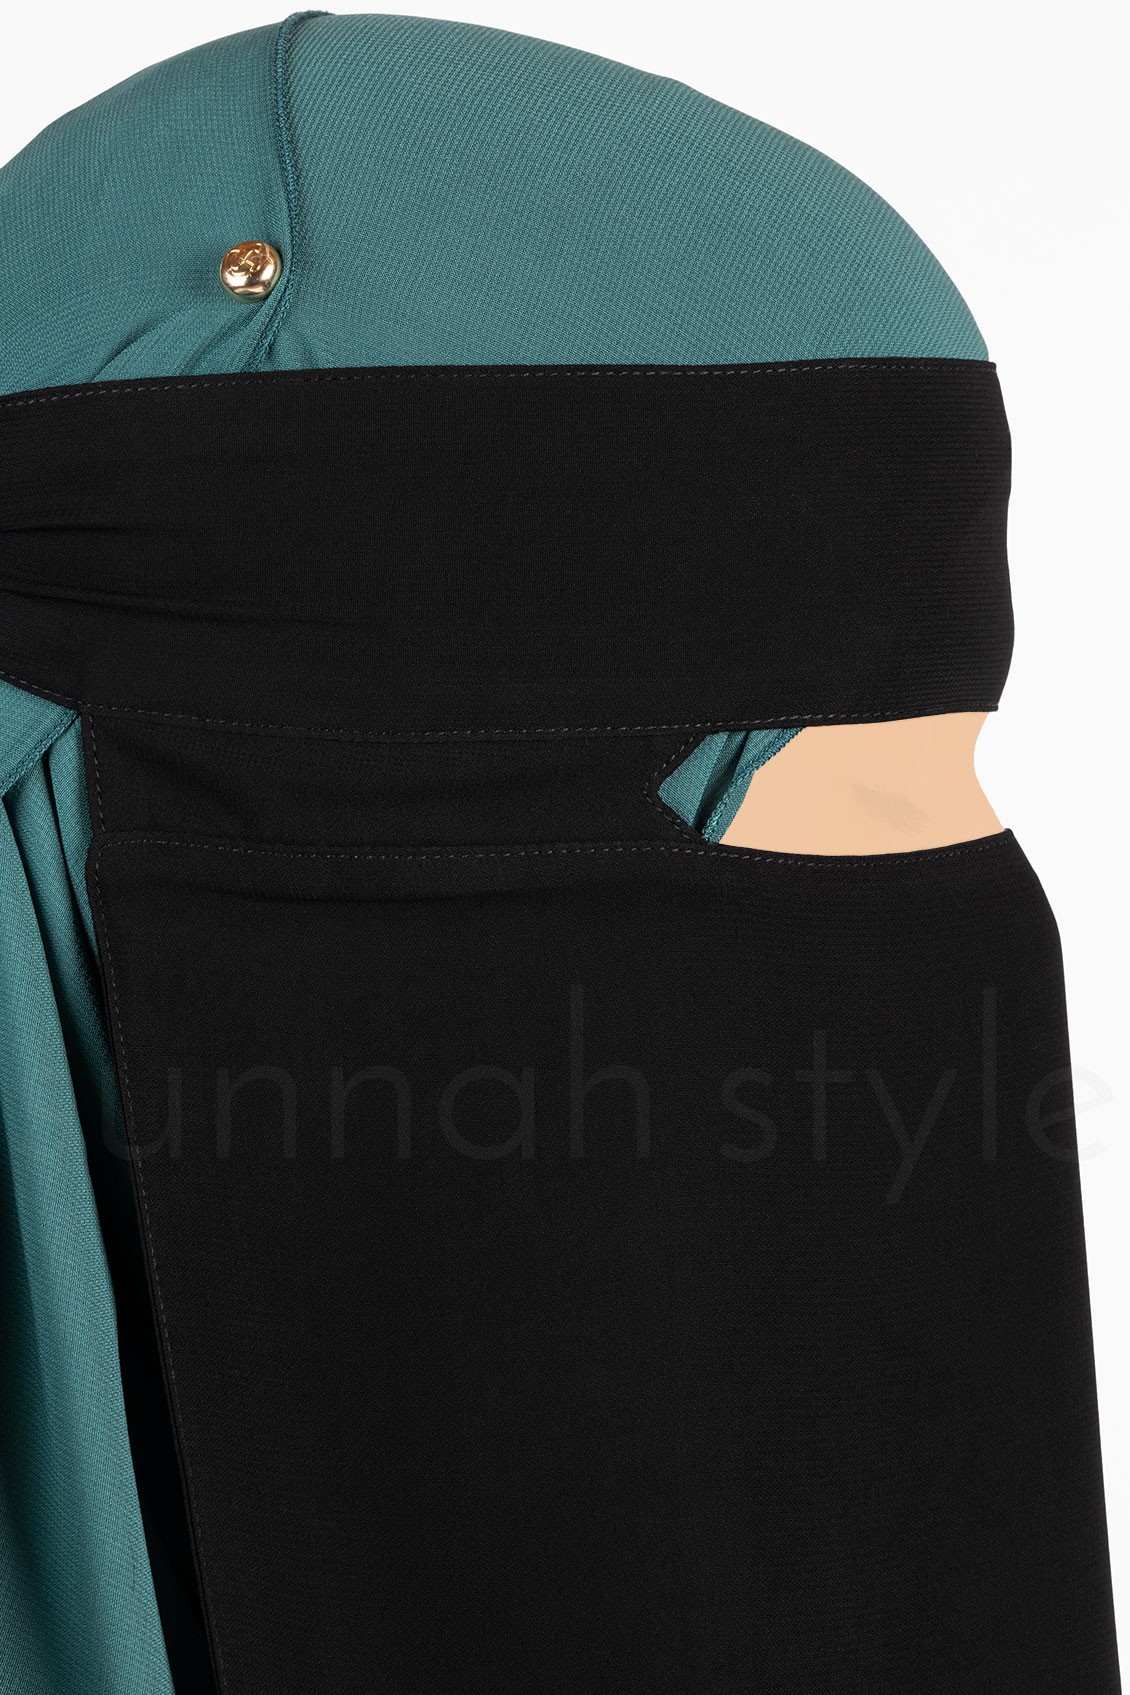 Sunnah Style No-Pinch One Layer Niqab Black